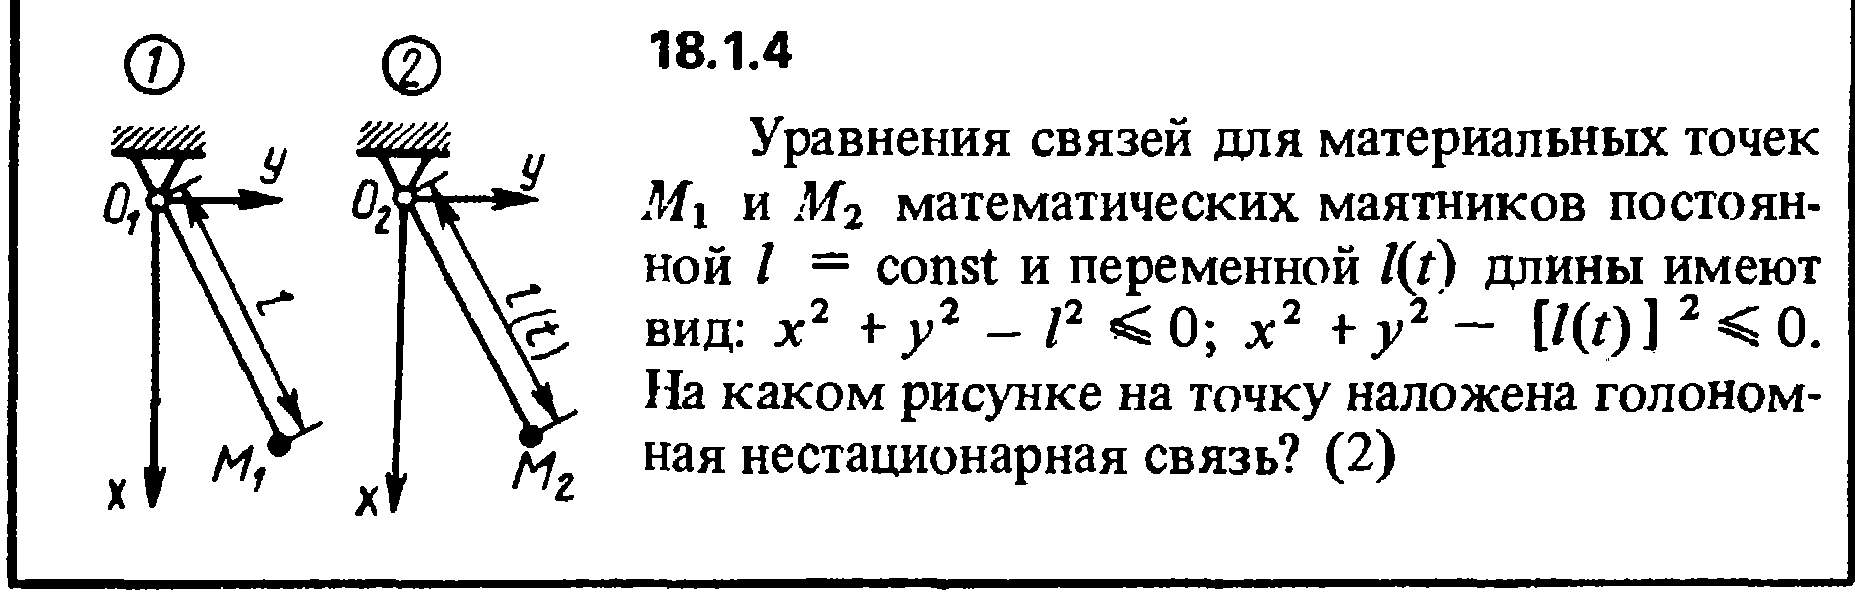 Решение18.1.4 из сборника (решебника) Кепе О.Е. 1989 г